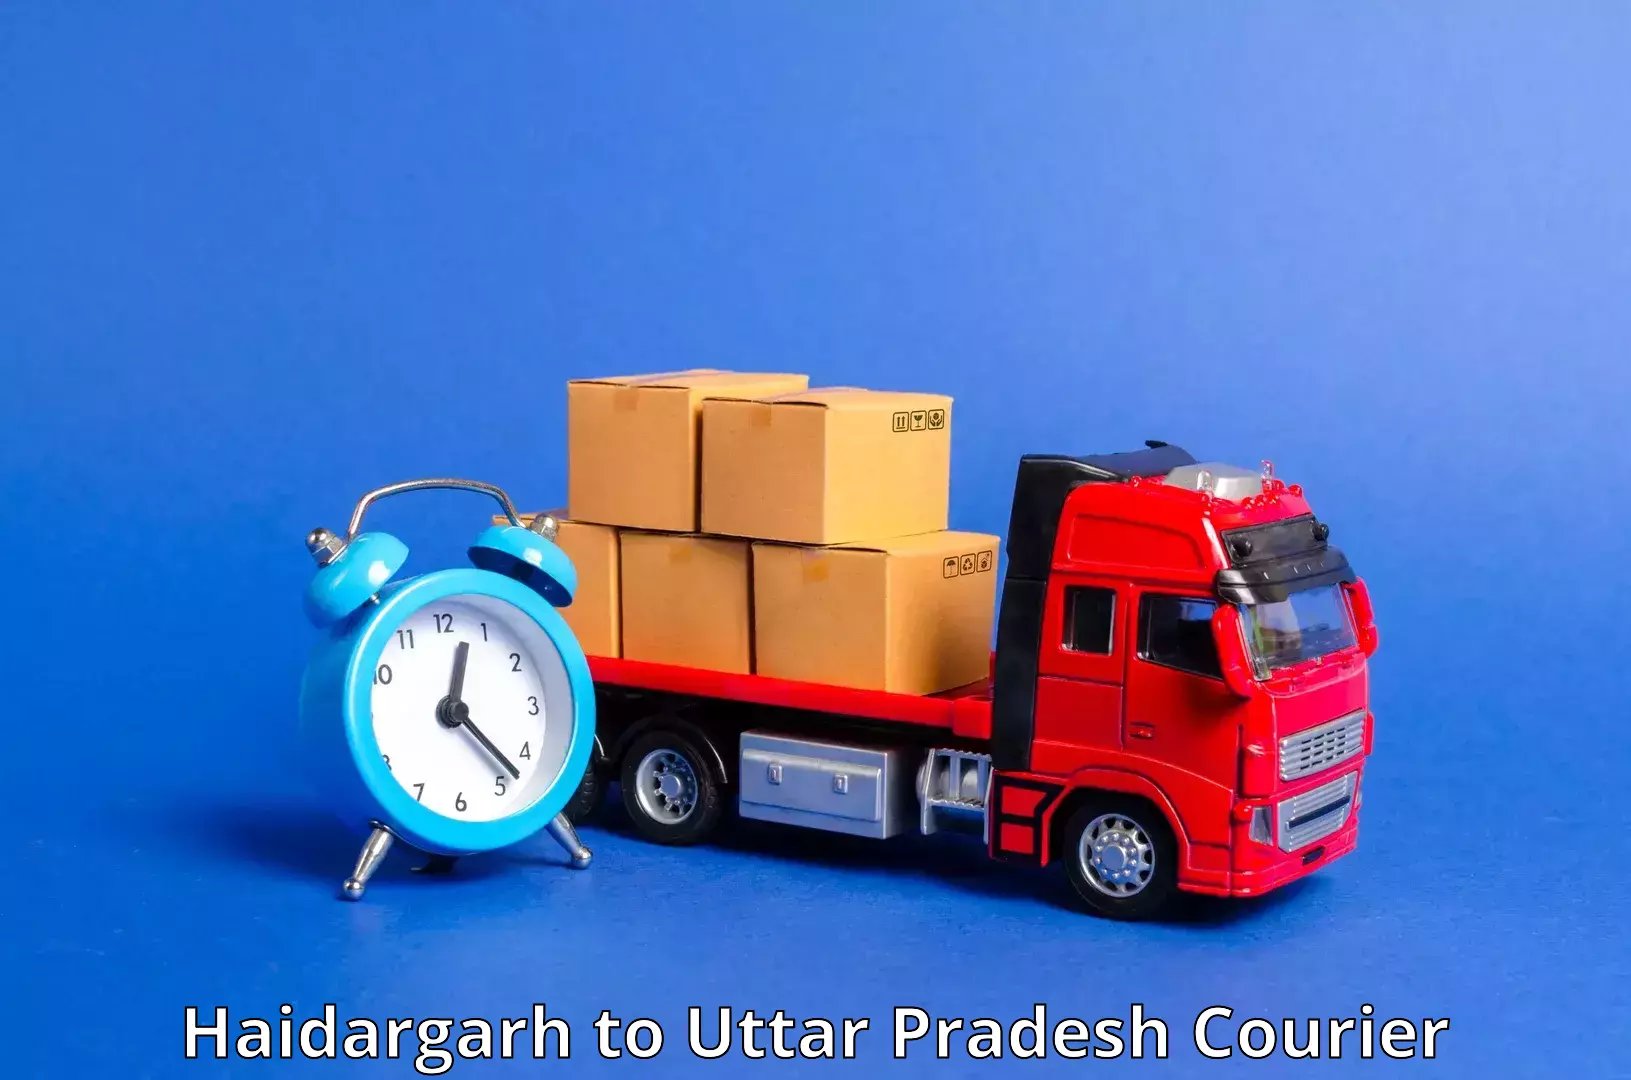 Cost-effective shipping solutions Haidargarh to Ballia